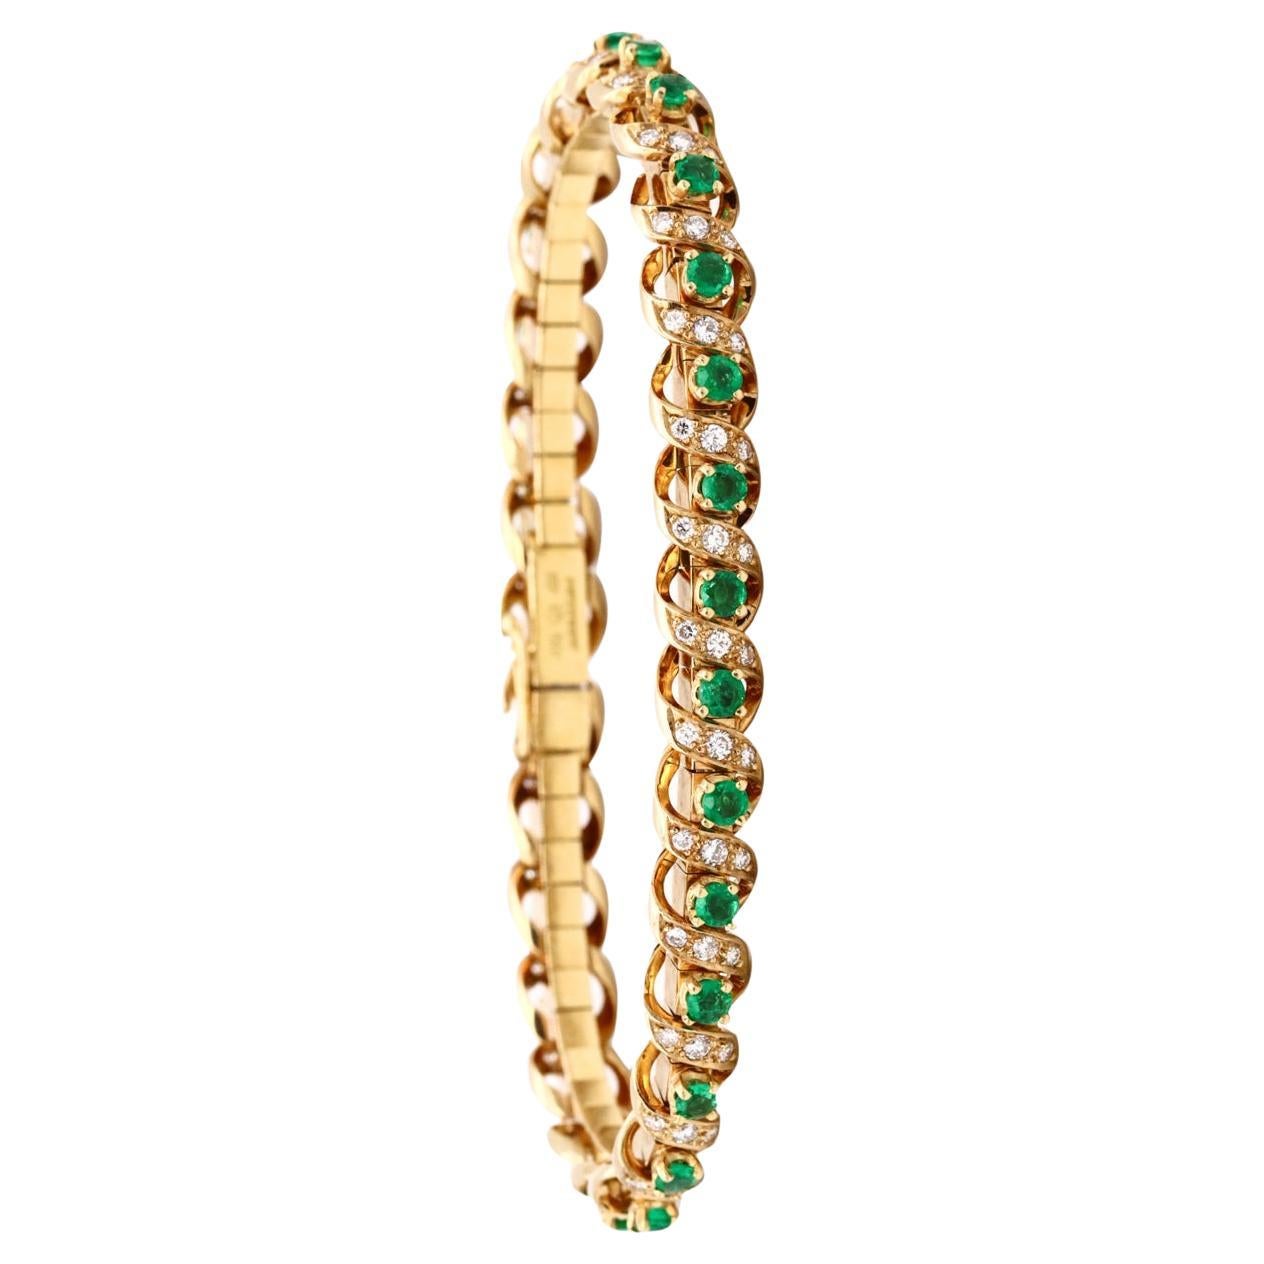 Gubelin 1960 Swiss 18kt Gold Bracelet 4.64 Ctw Colombian Emeralds and Diamonds For Sale